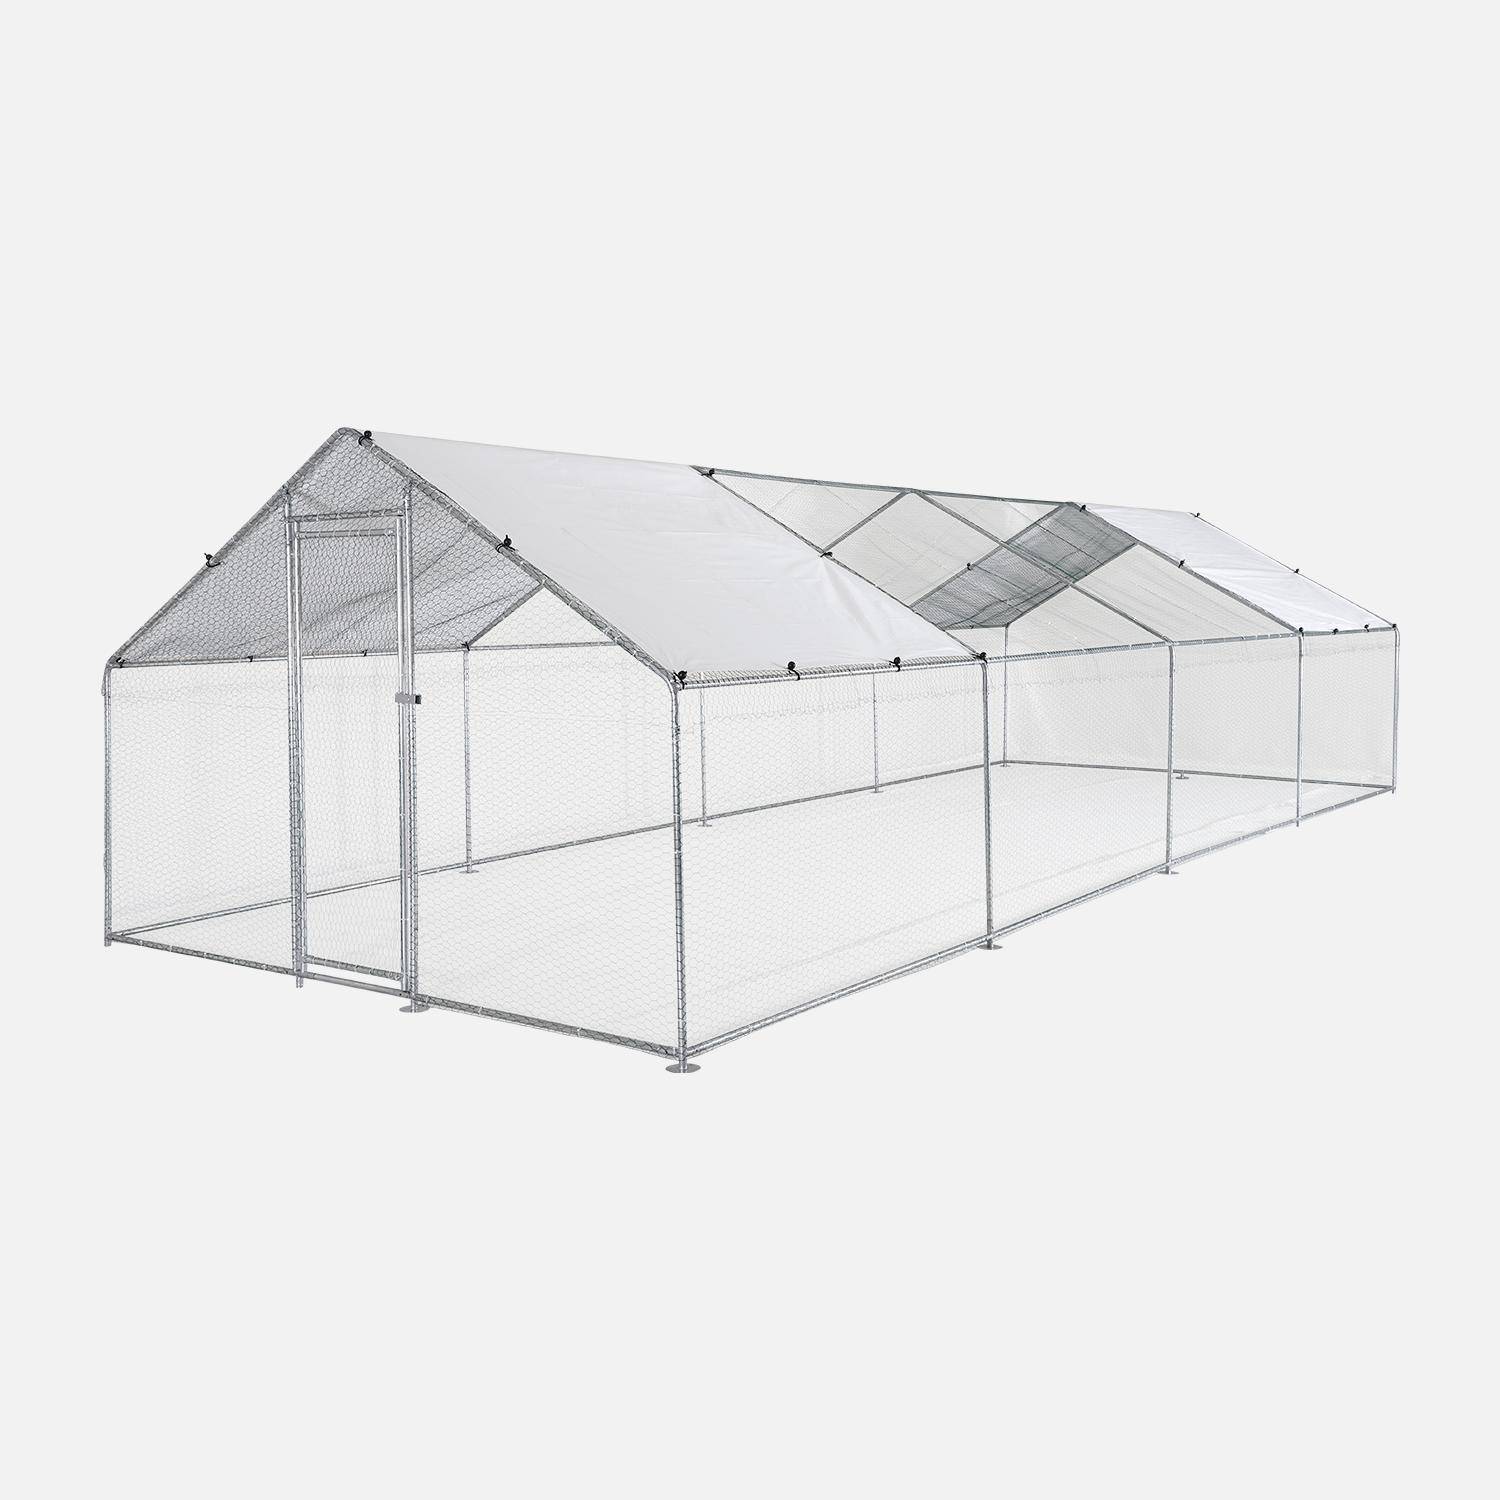 Kippenverblijf 24m² - Babette - gegalvaniseerd staal, waterdicht en UV-bestendig dak, deur met klink Photo1